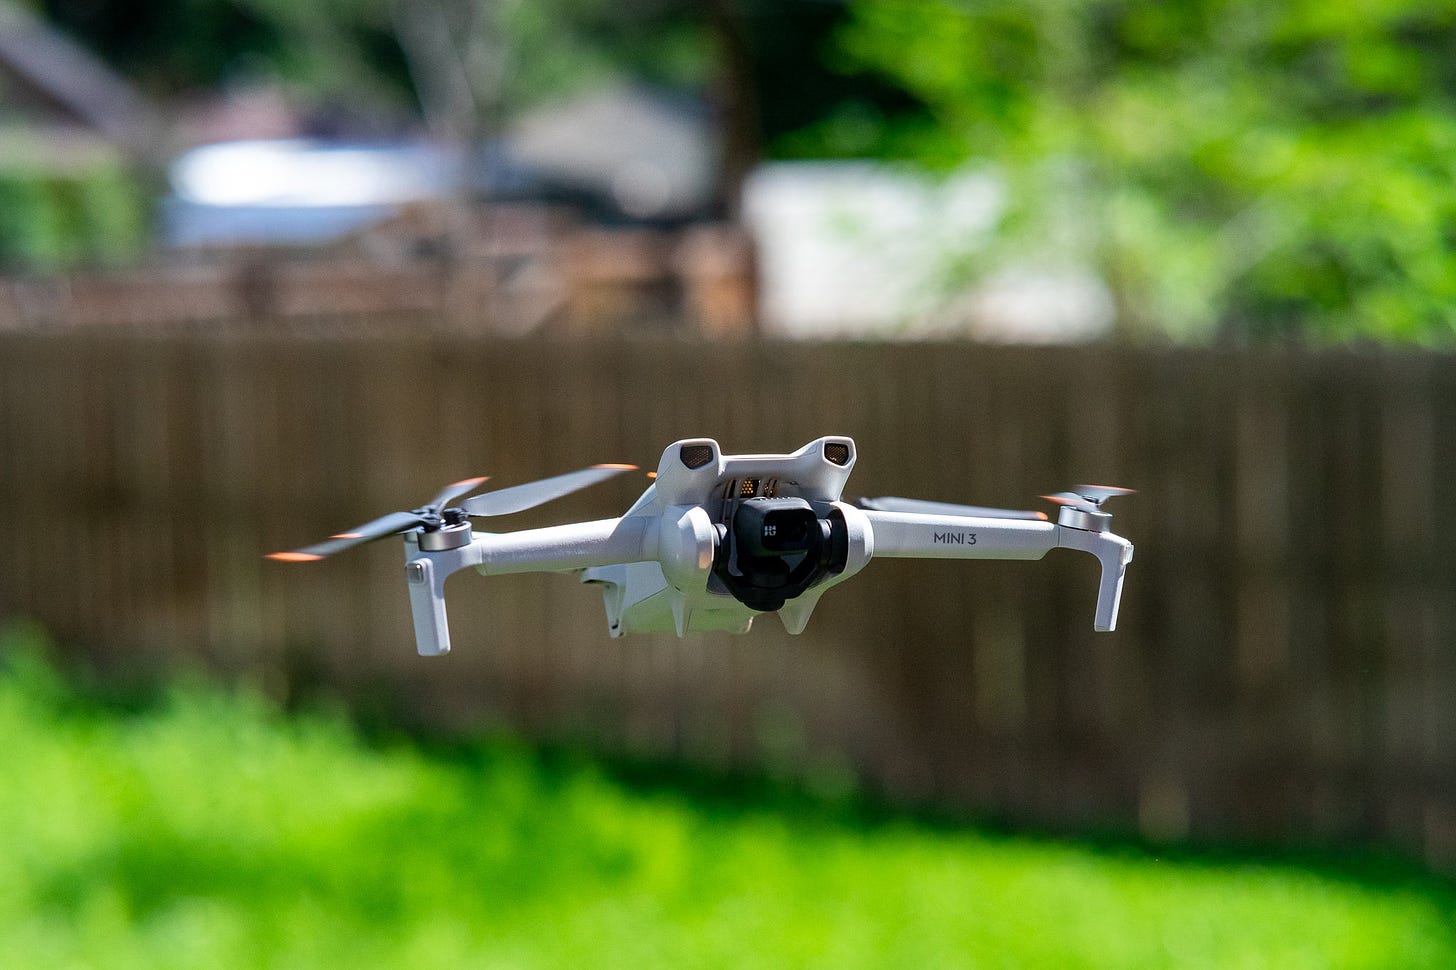 DJI Mini 3 drone in flight capturing a scenic landscape.